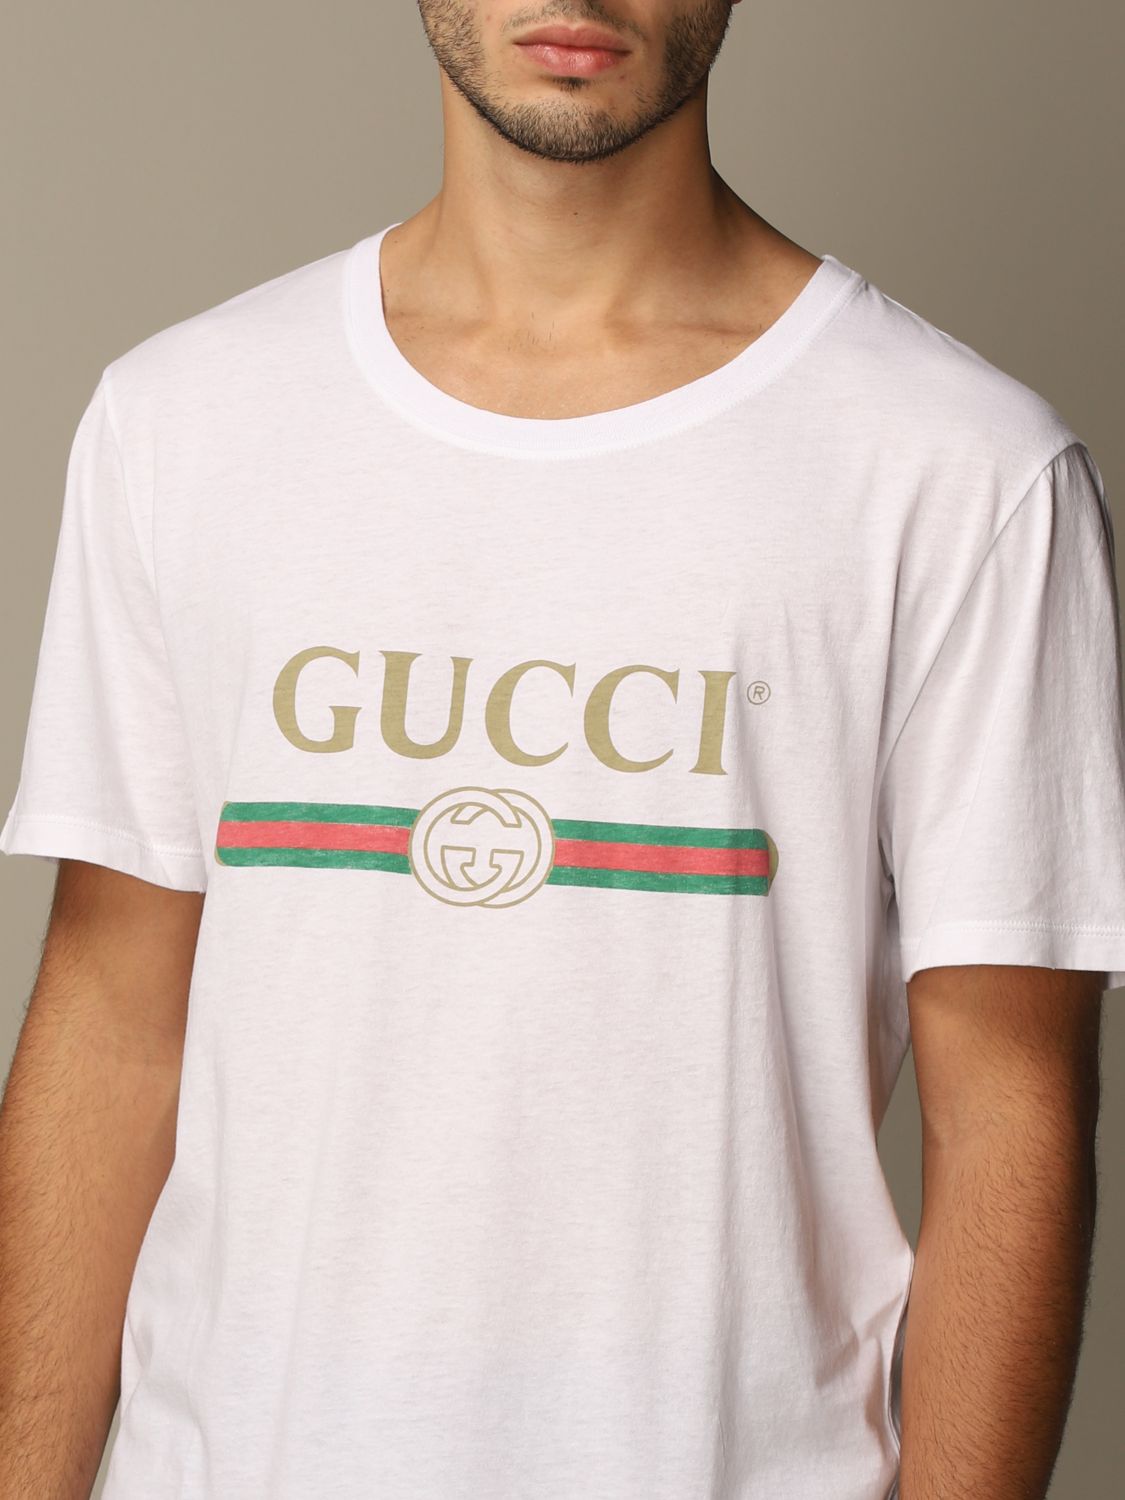 T-shirt Gucci in cotone con logo vintage | T-Shirt Gucci Uomo Bianco | T-Shirt  Gucci 440103 X3F05 Giglio IT